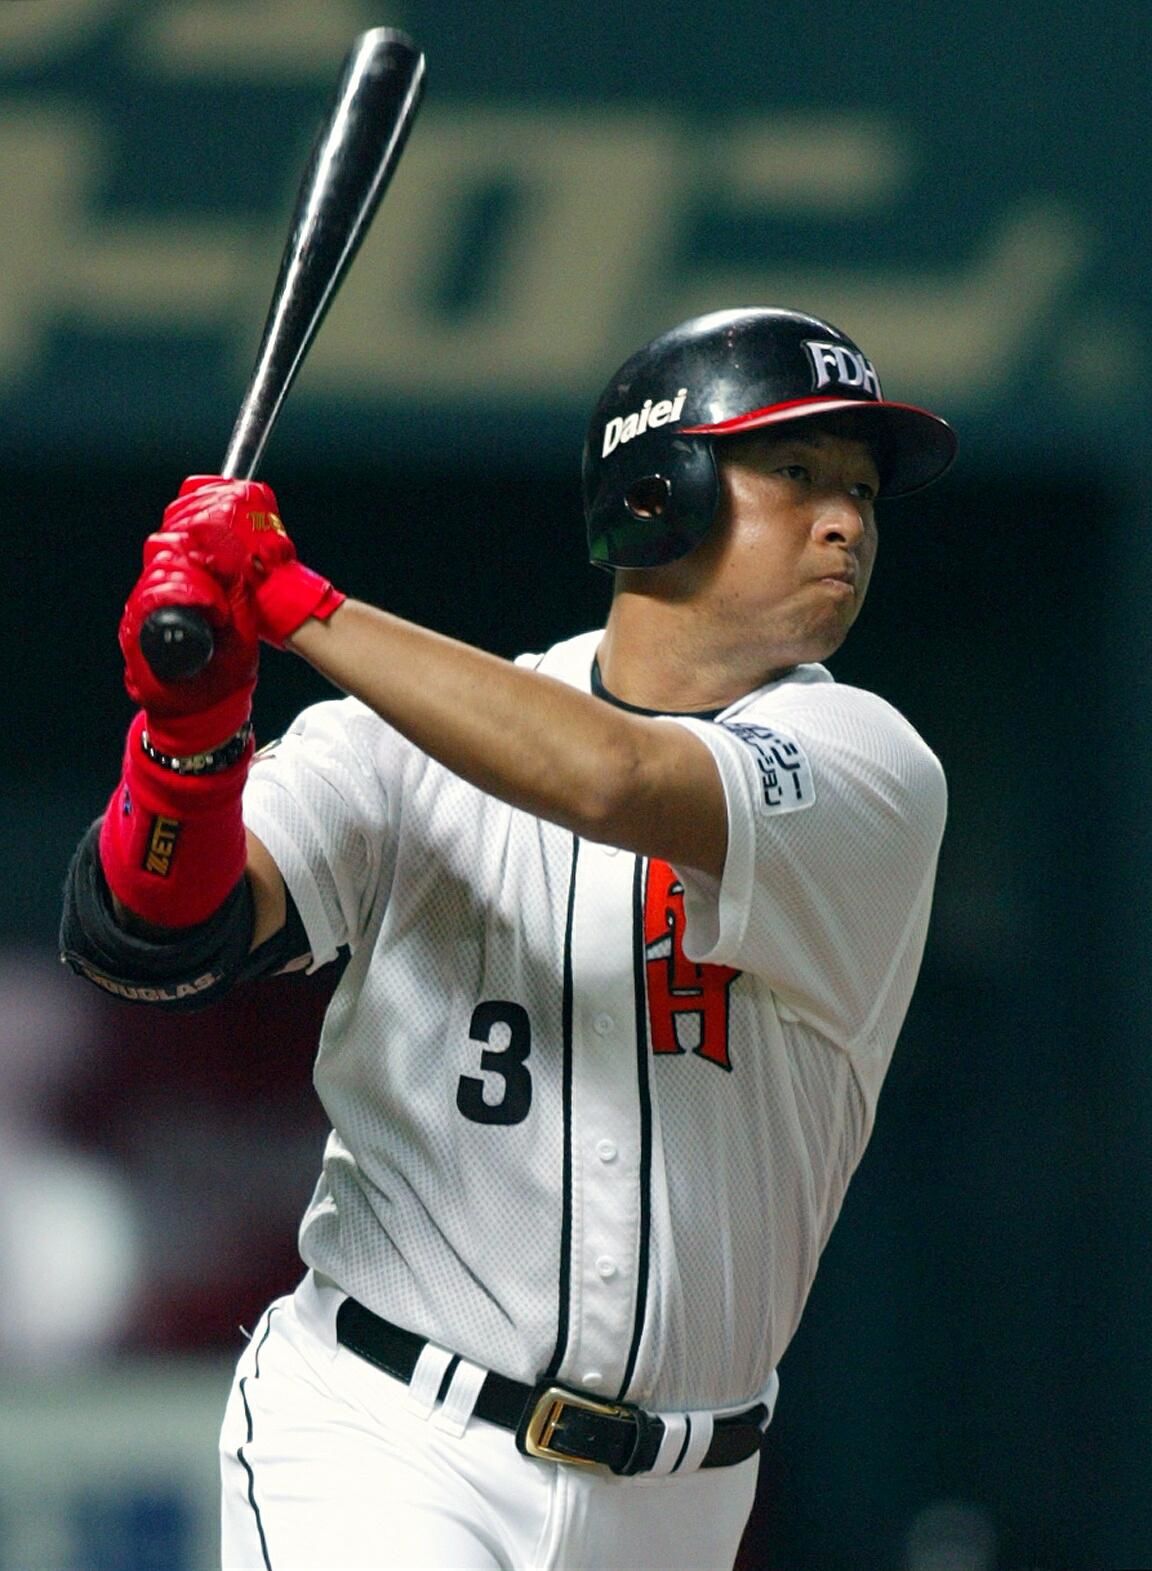 Matsunaka goes to bat for the Hawks. (© Jiji) 